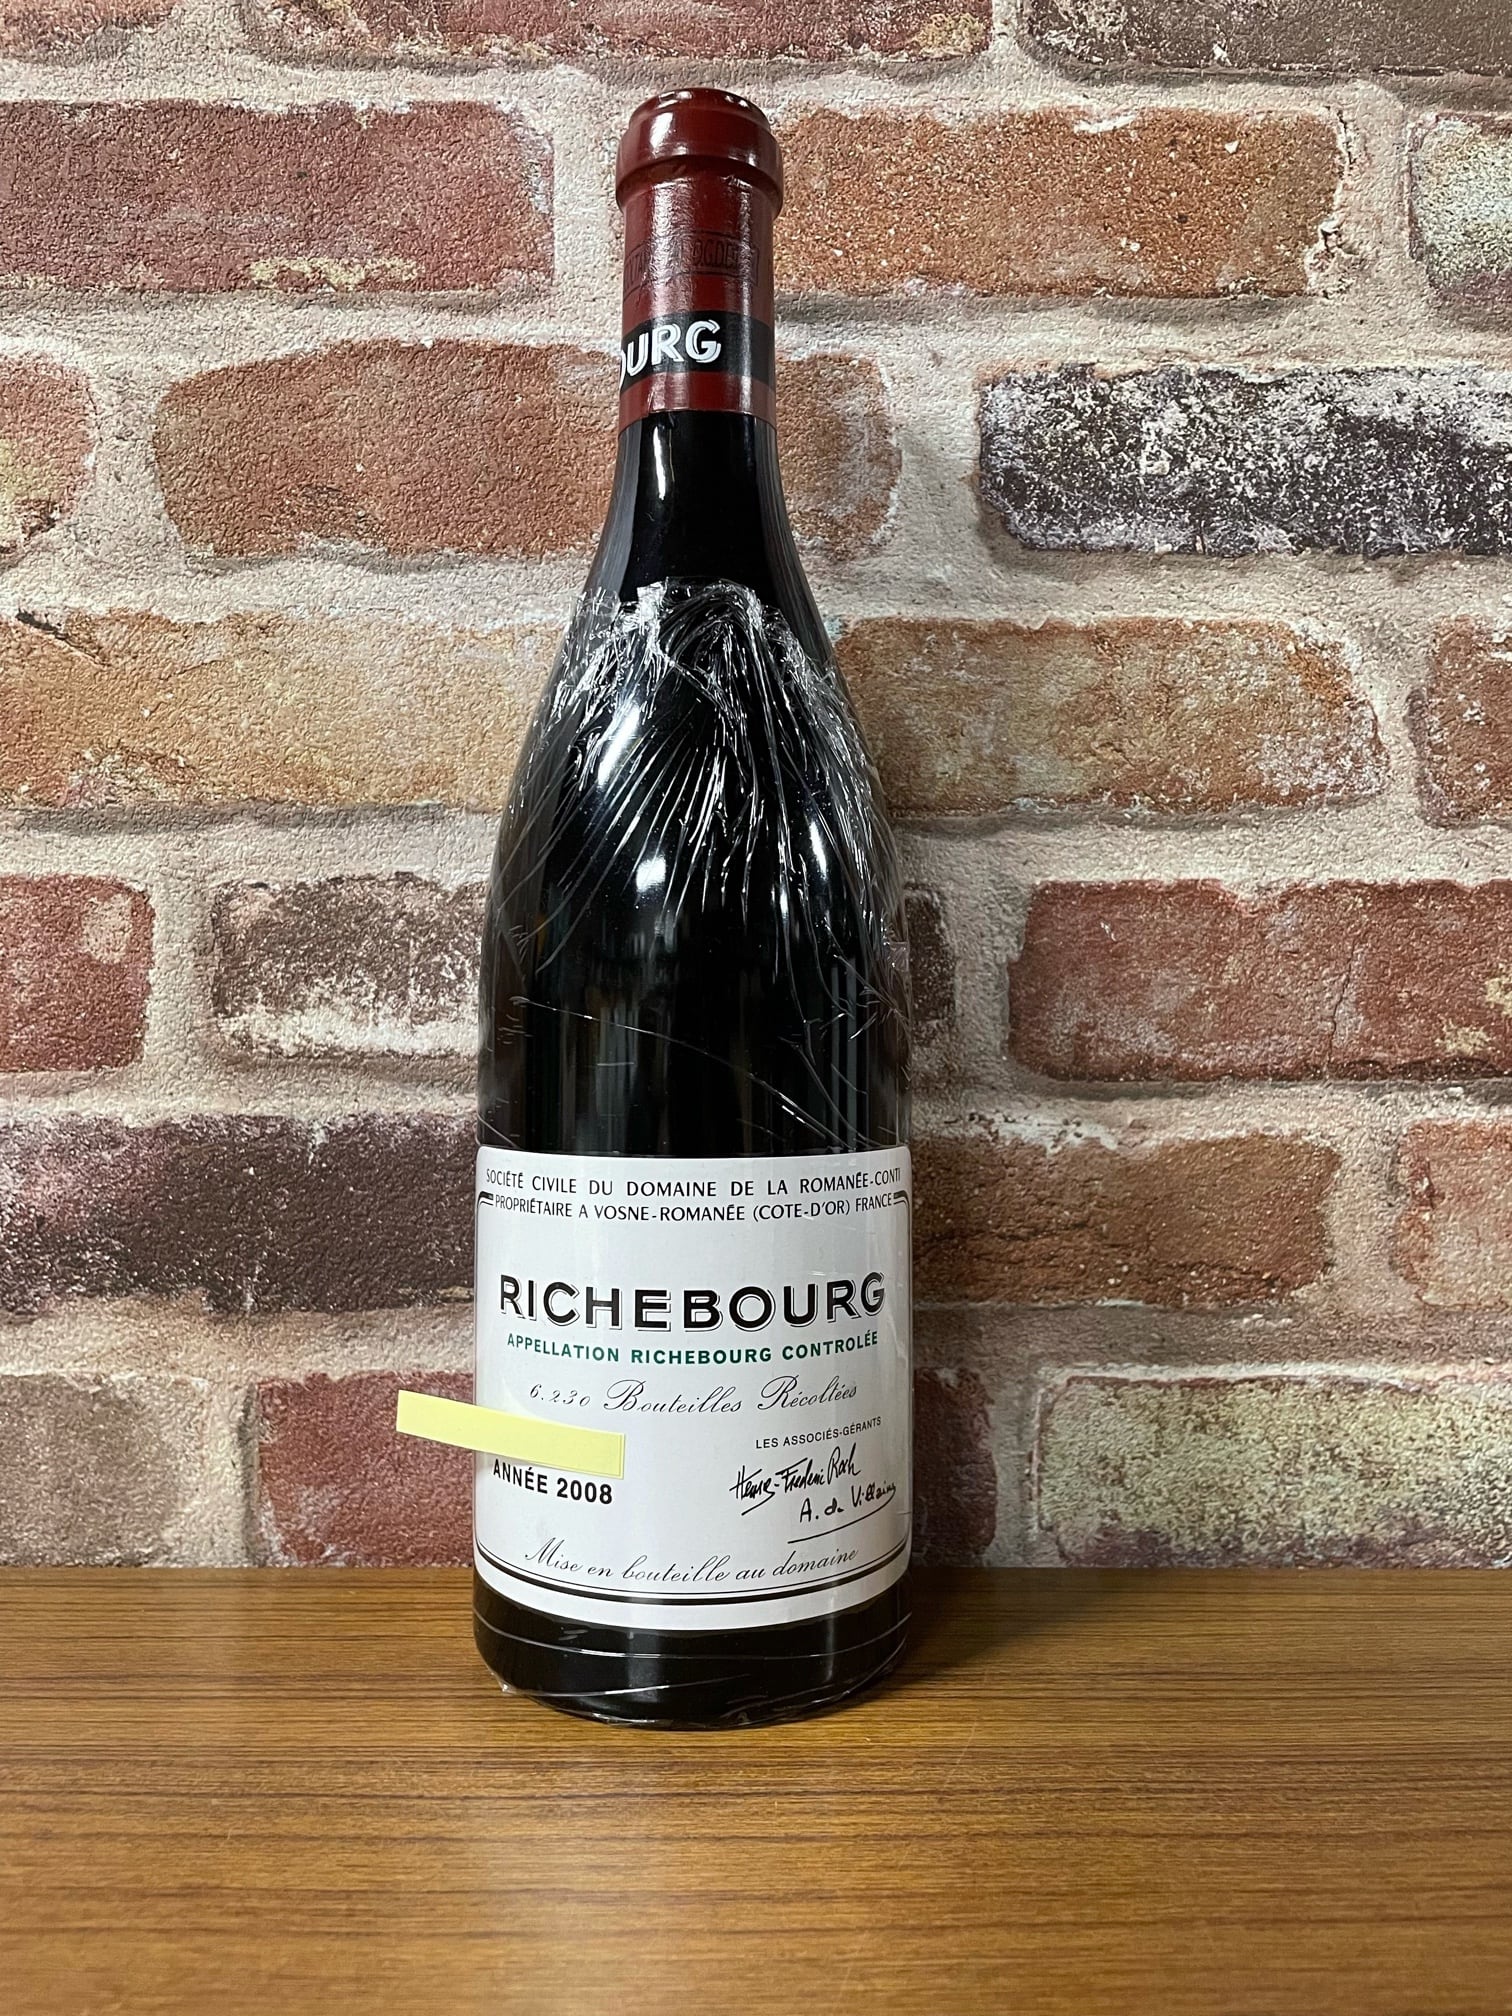 1995 BR DRCリシュブール Riche ou g 赤ワイン